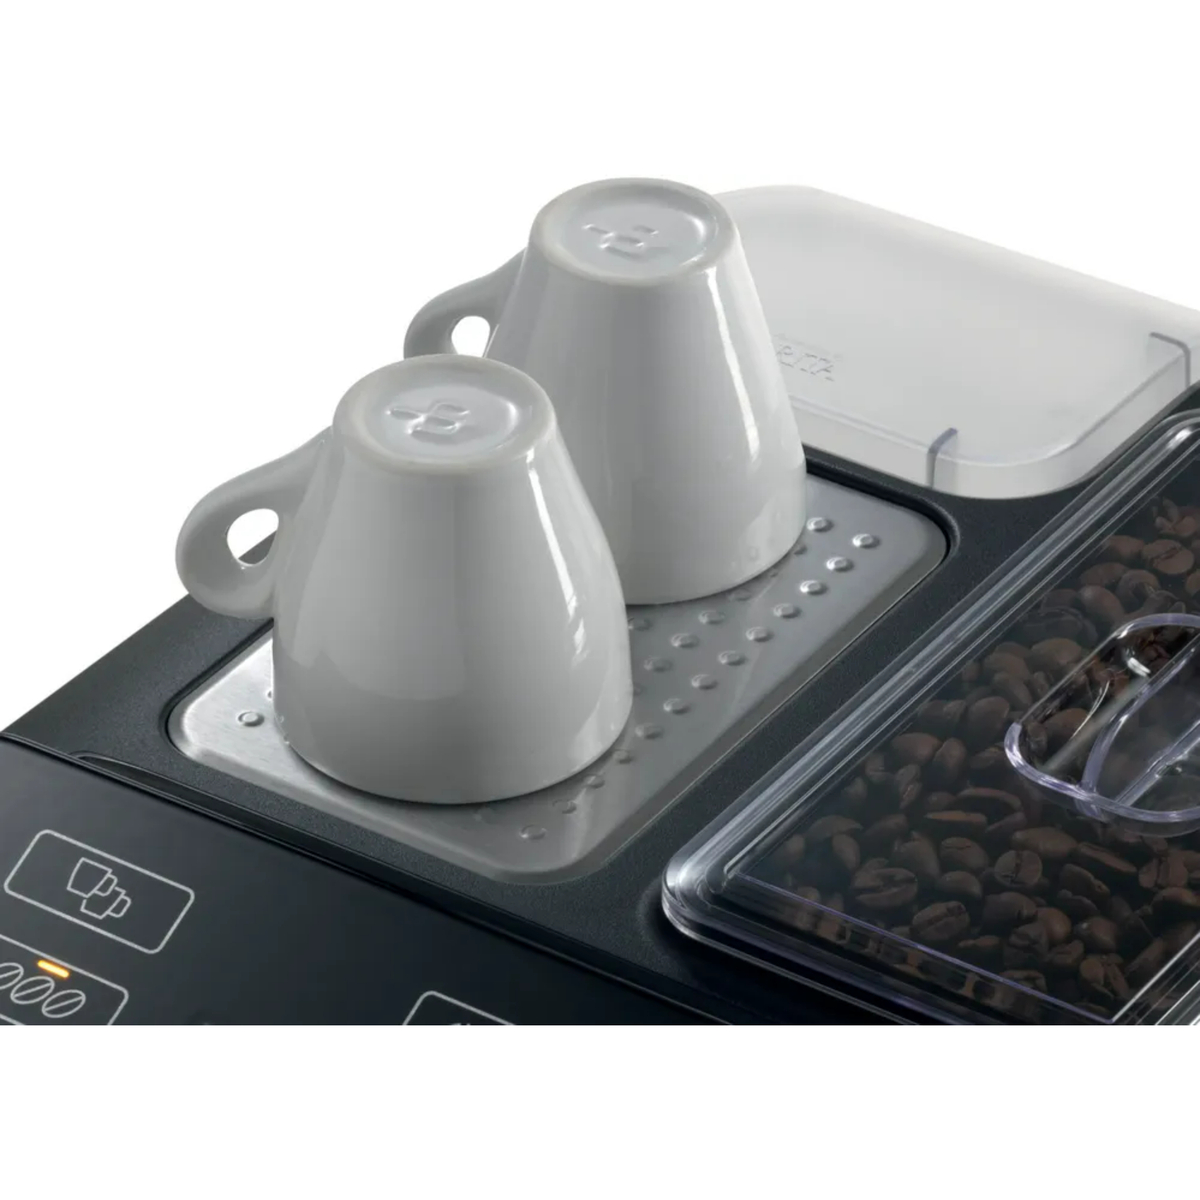 Bosch Fully Automatic Coffee Machine VeroCup 300, Silver/Black, TIS30321GB